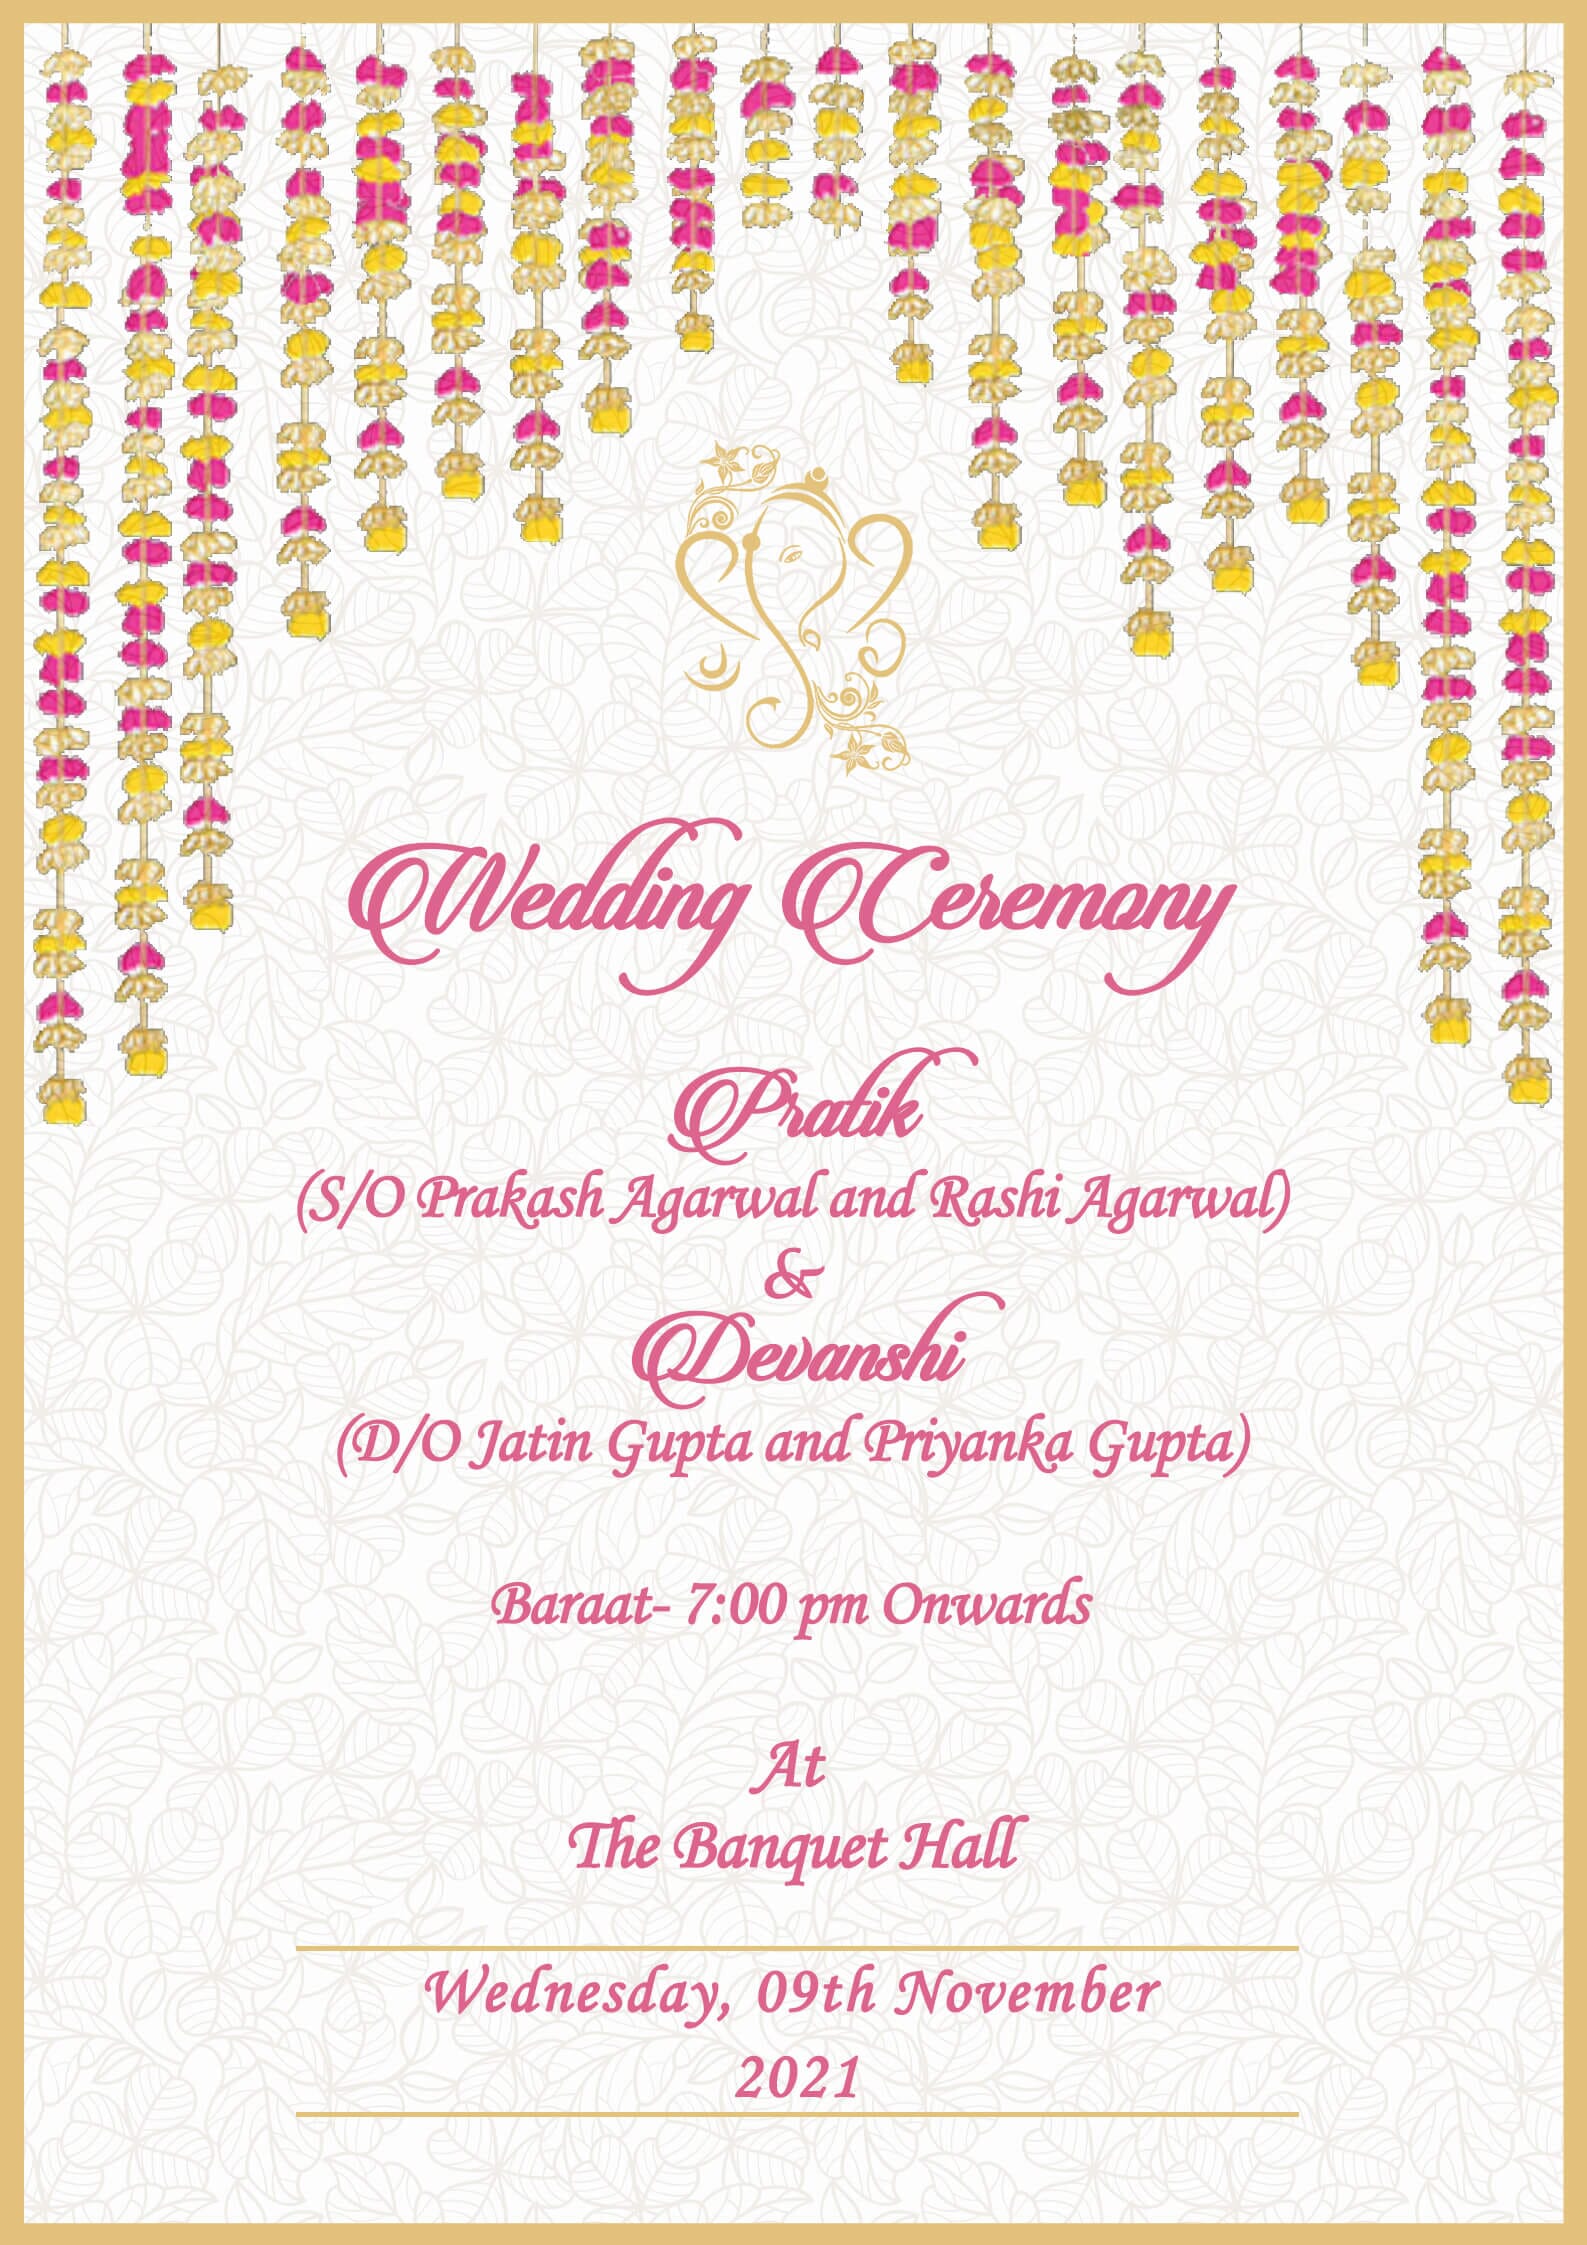 Royal Indian Wedding Invitation Cards